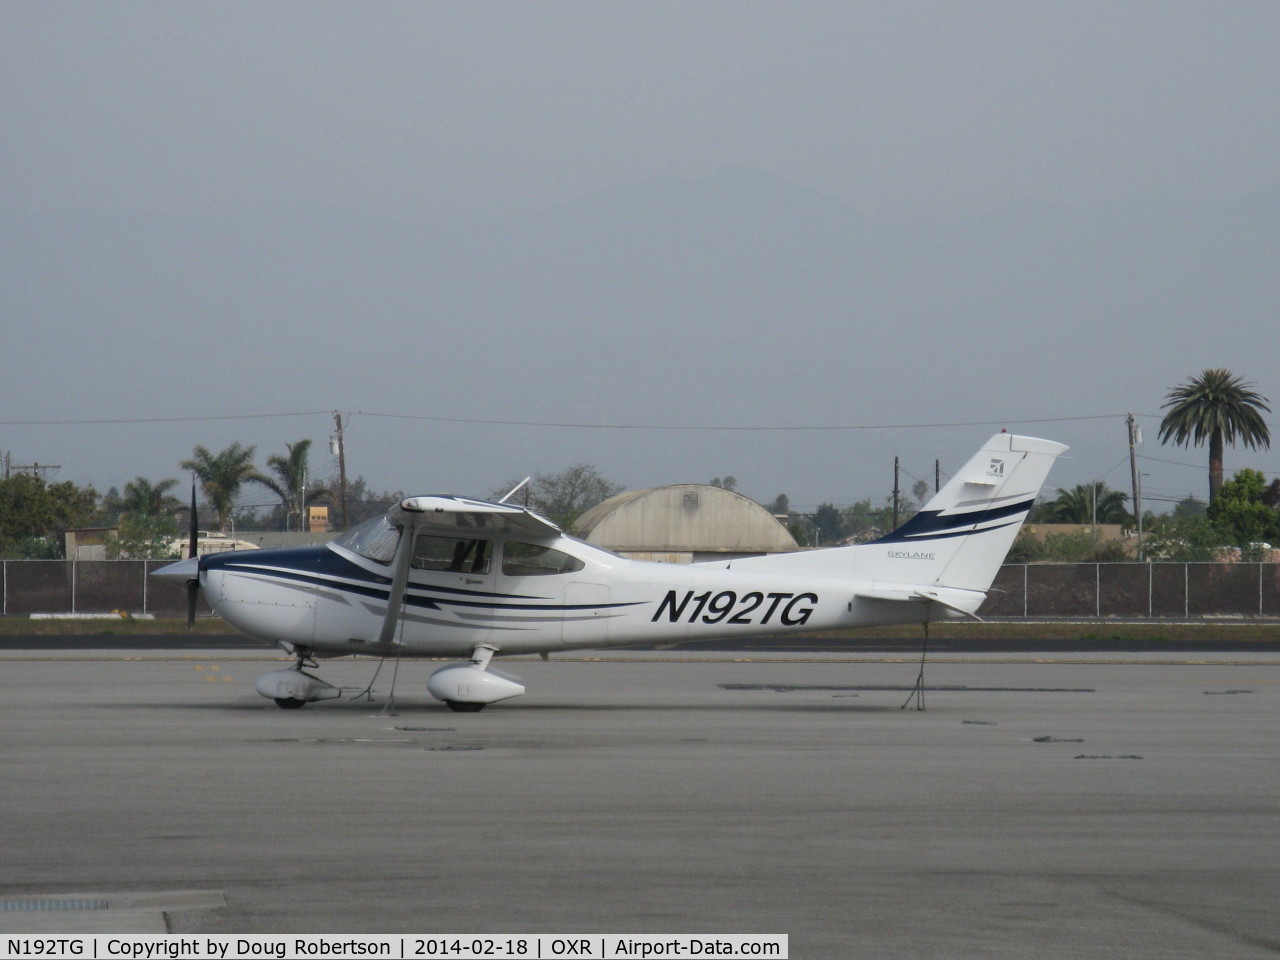 N192TG, 2005 Cessna 182T Skylane C/N 18281524, 2005 Cessna 182T SKYLANE, Lycoming IO-540-AB1A5 230 Hp